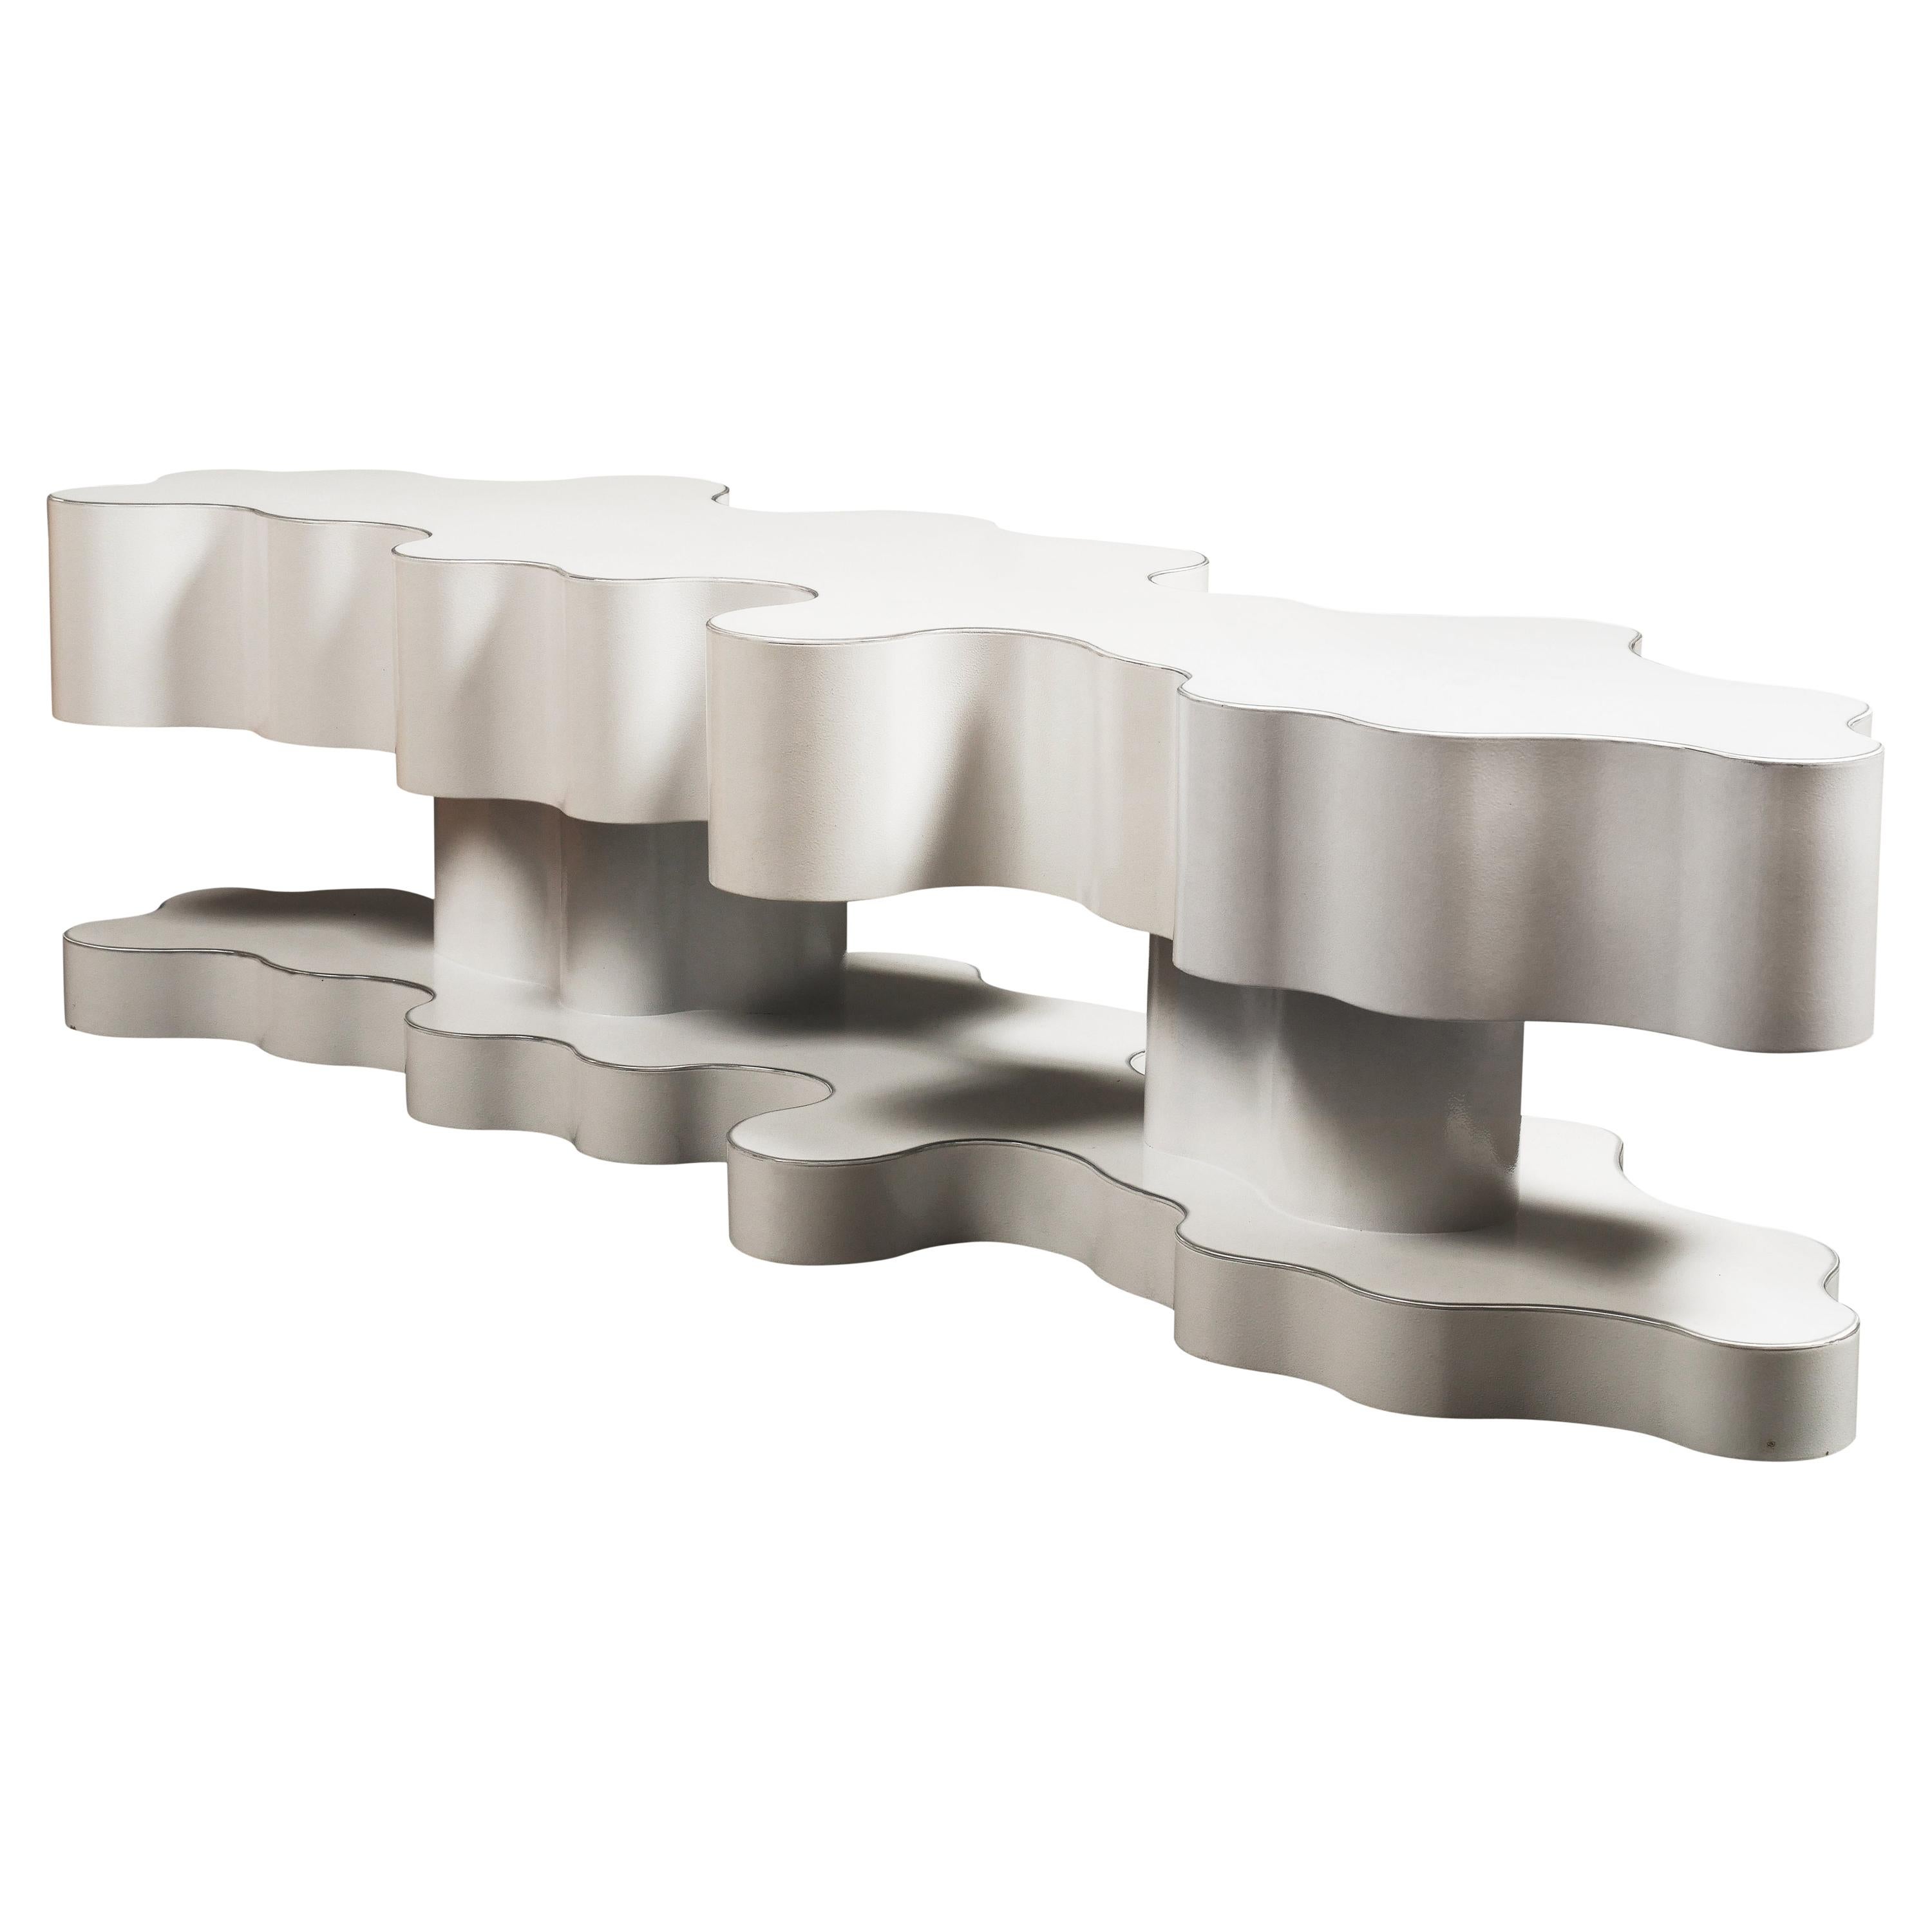 Bert Furnari Studio Abstract Pedestal Coffee Table